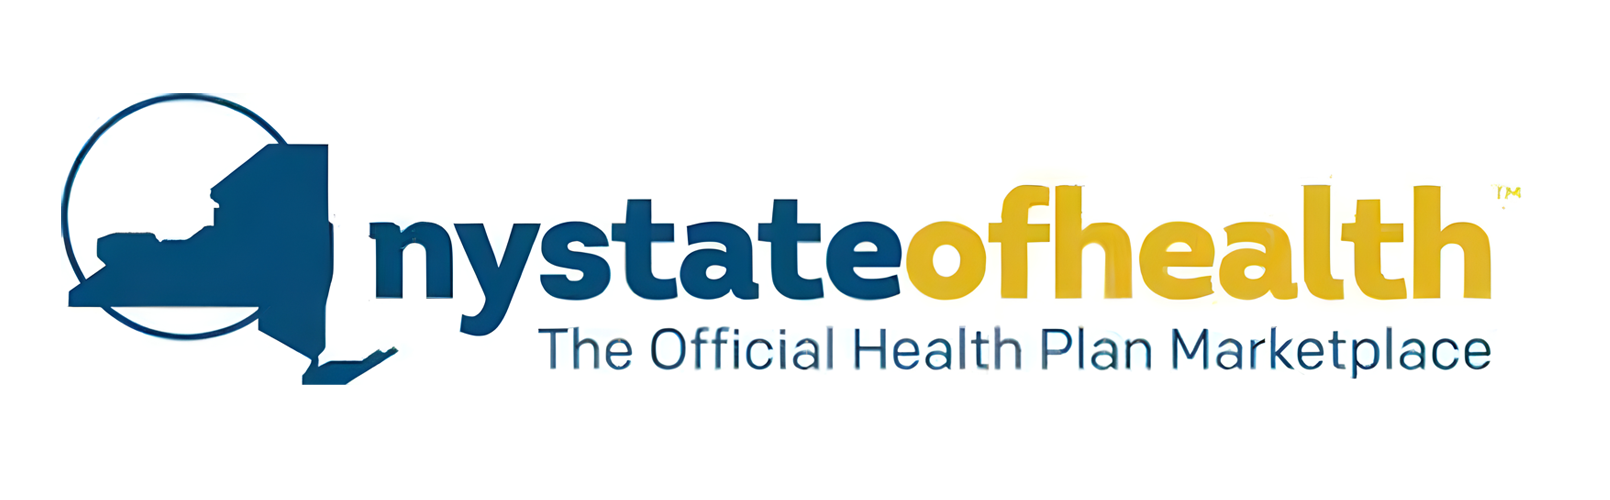 NY-State-of-Health